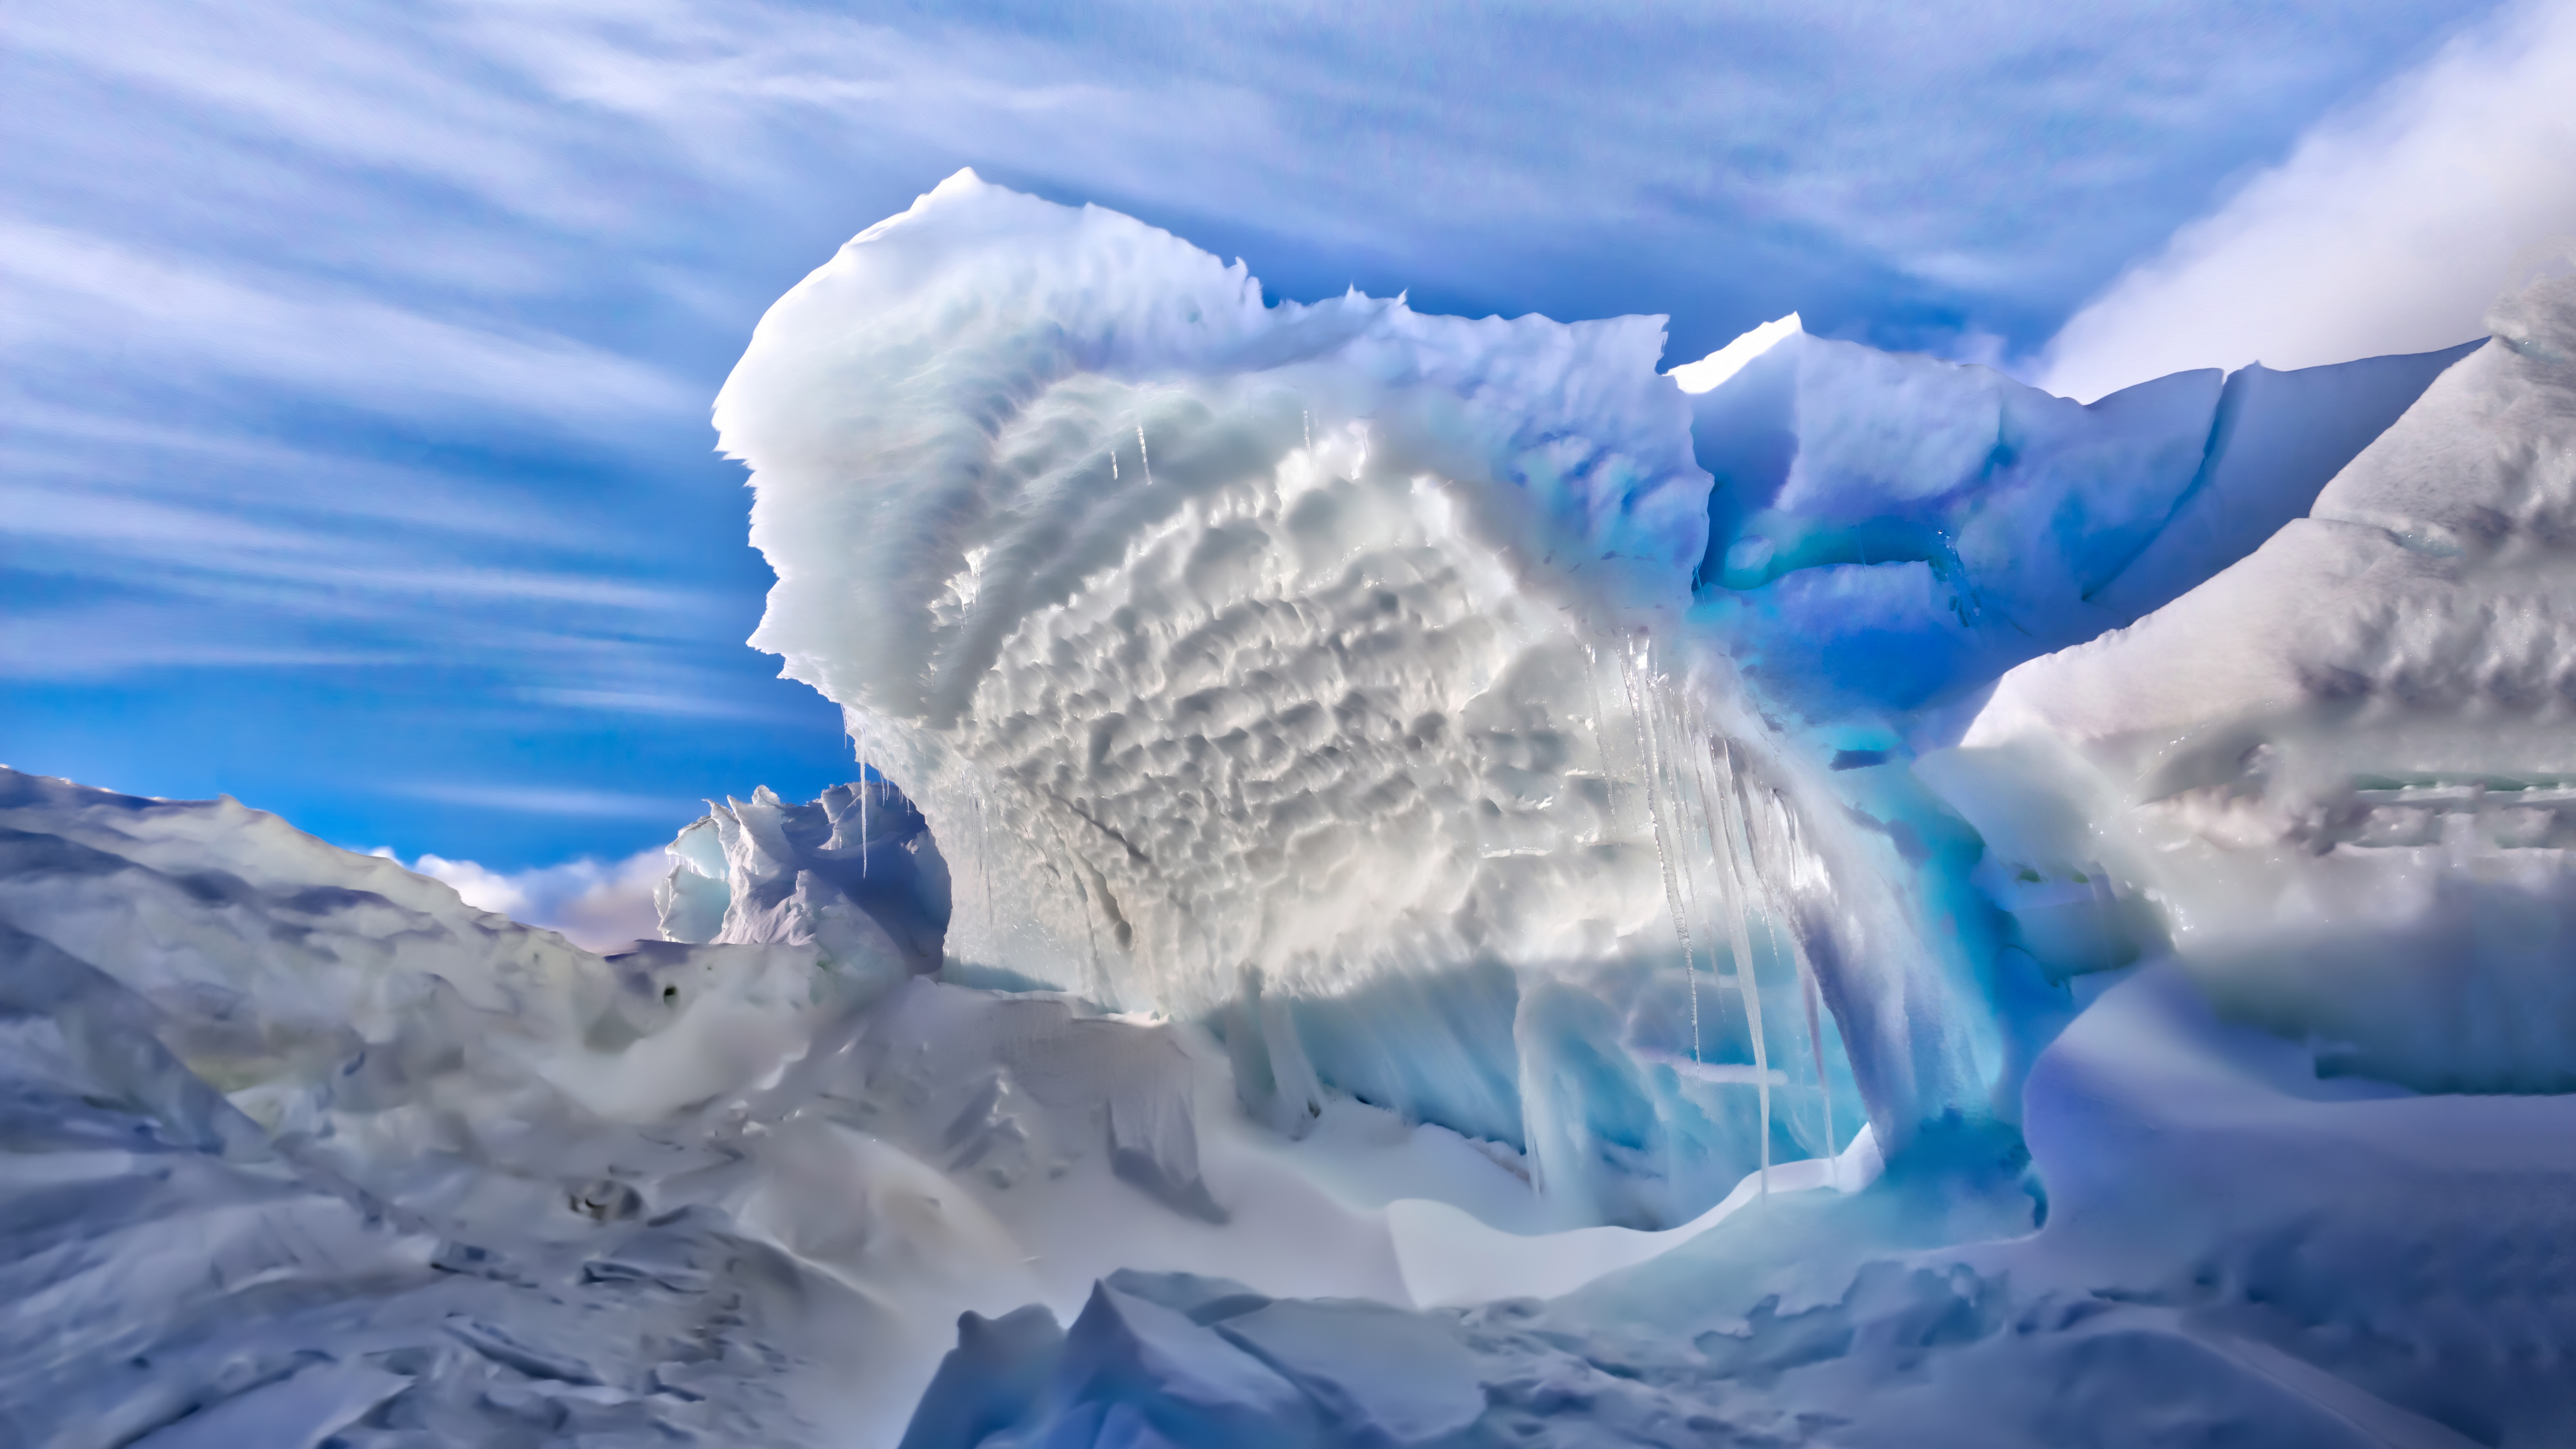 General 7680x4320 photography Trey Ratcliff landscape ice Antarctica